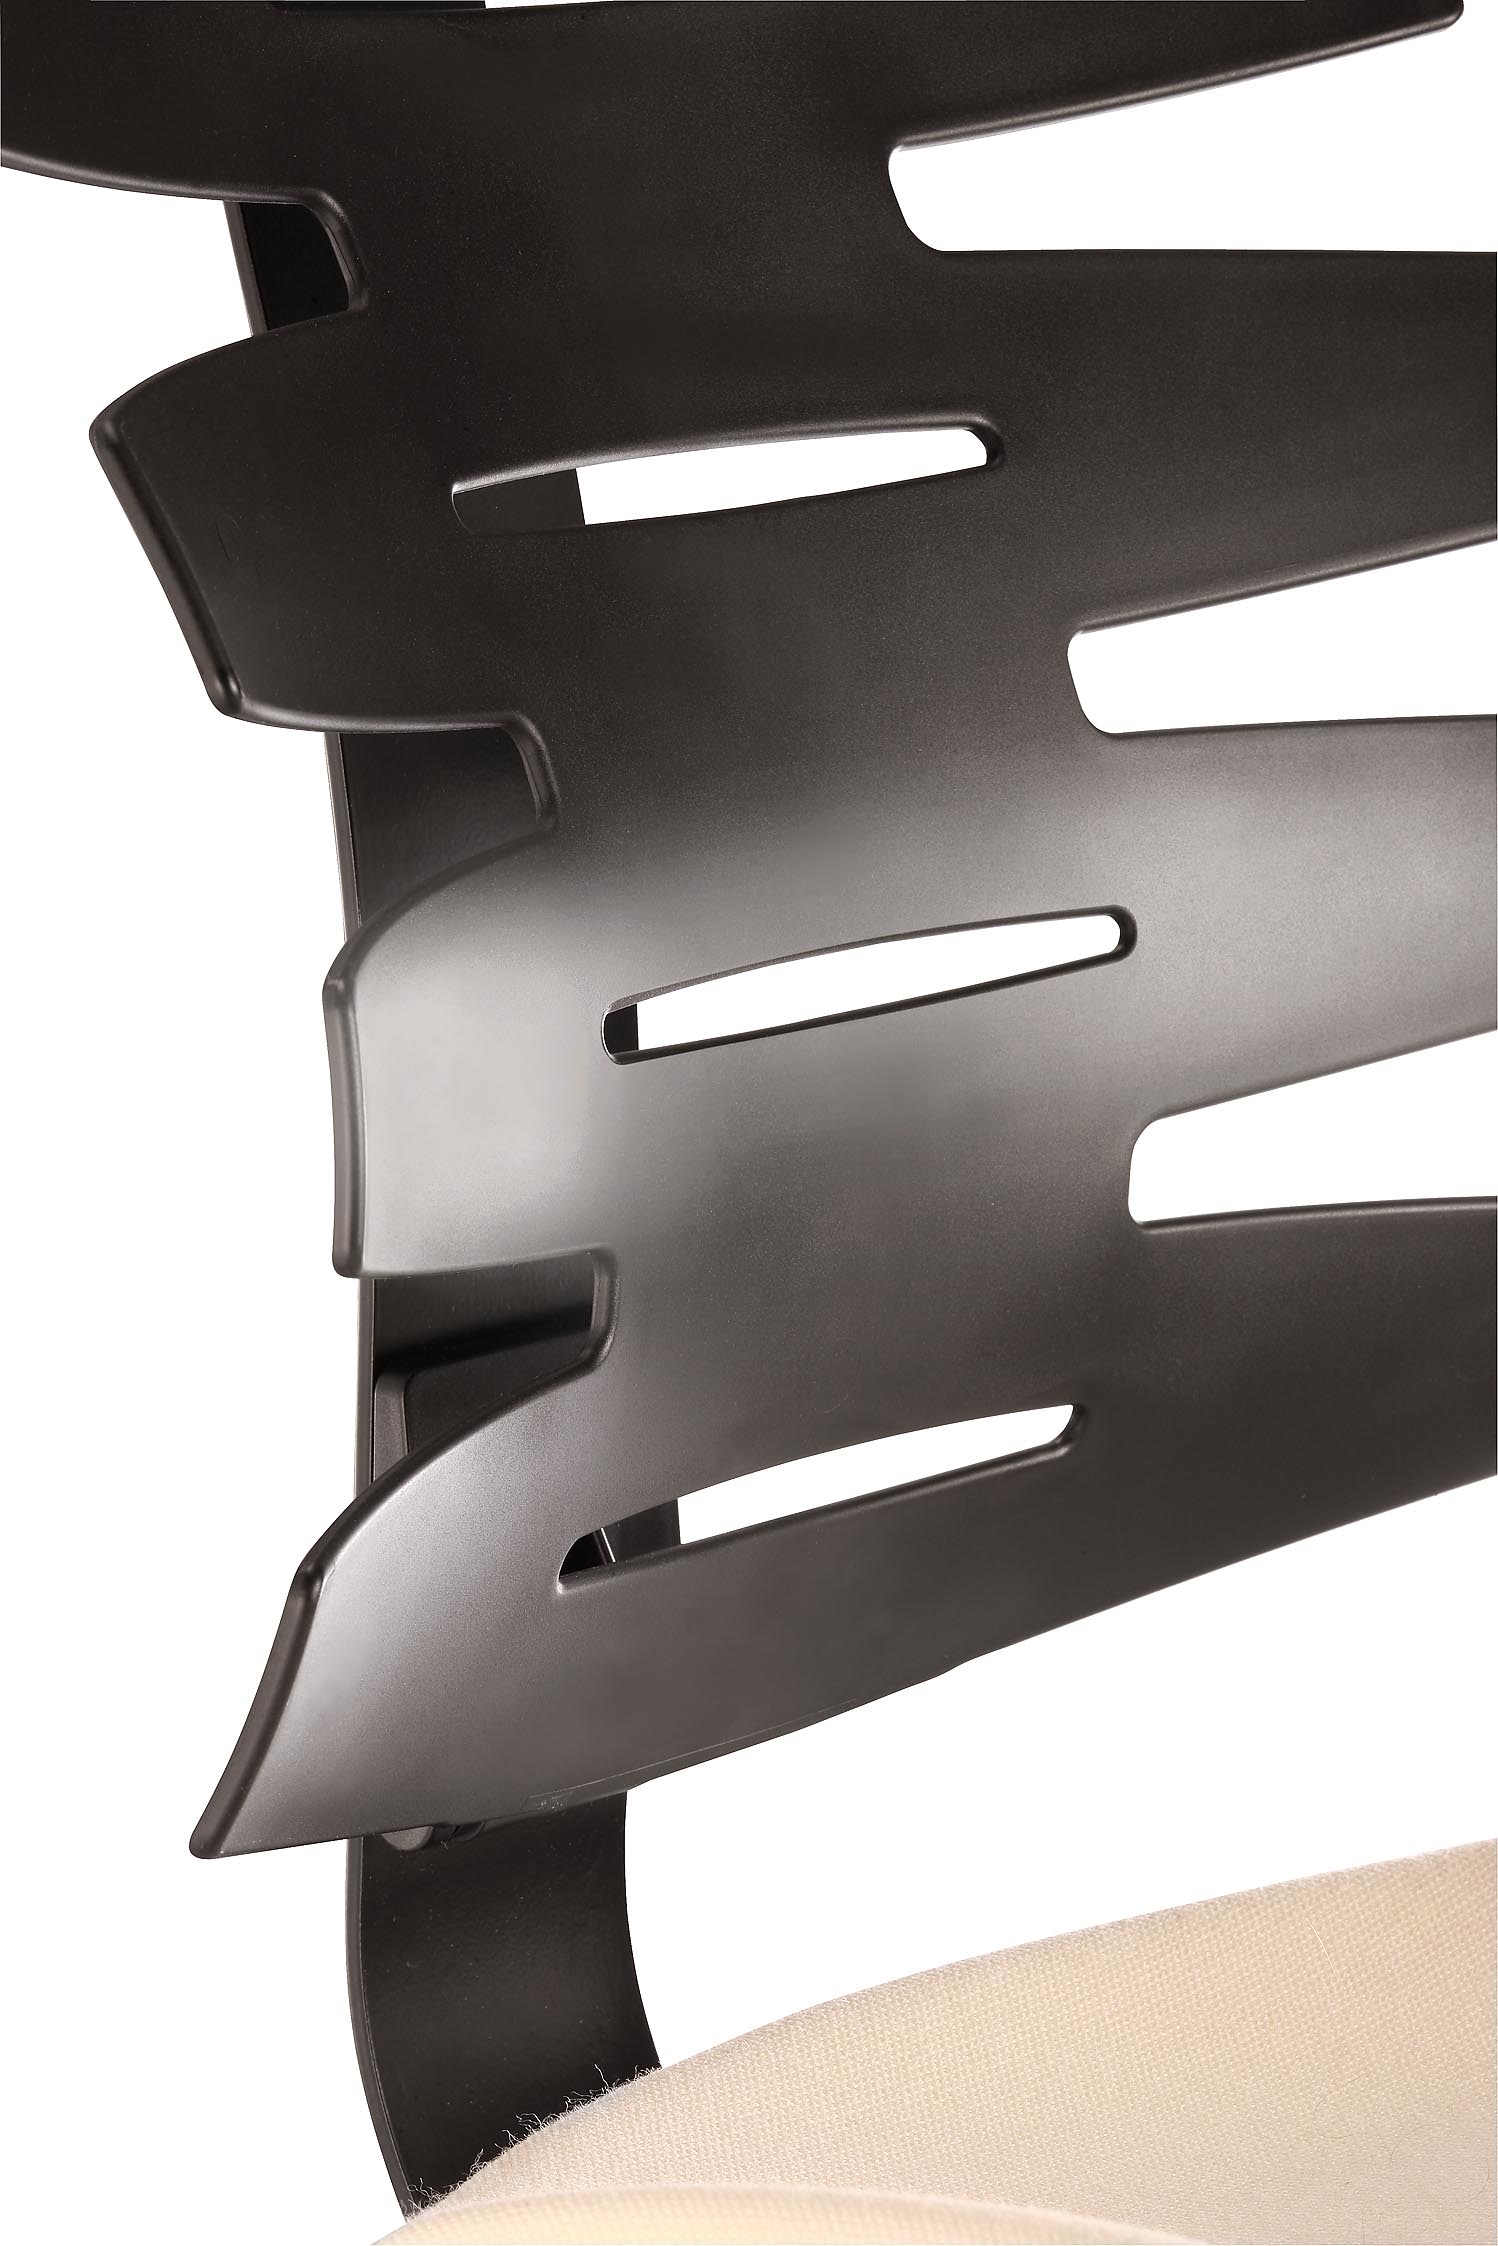 Sitag Wave Drehstuhl, Aluminium-Fußkreuz, Sitzbezug Extreme Farbe wählbar, Rücken Kunststoff